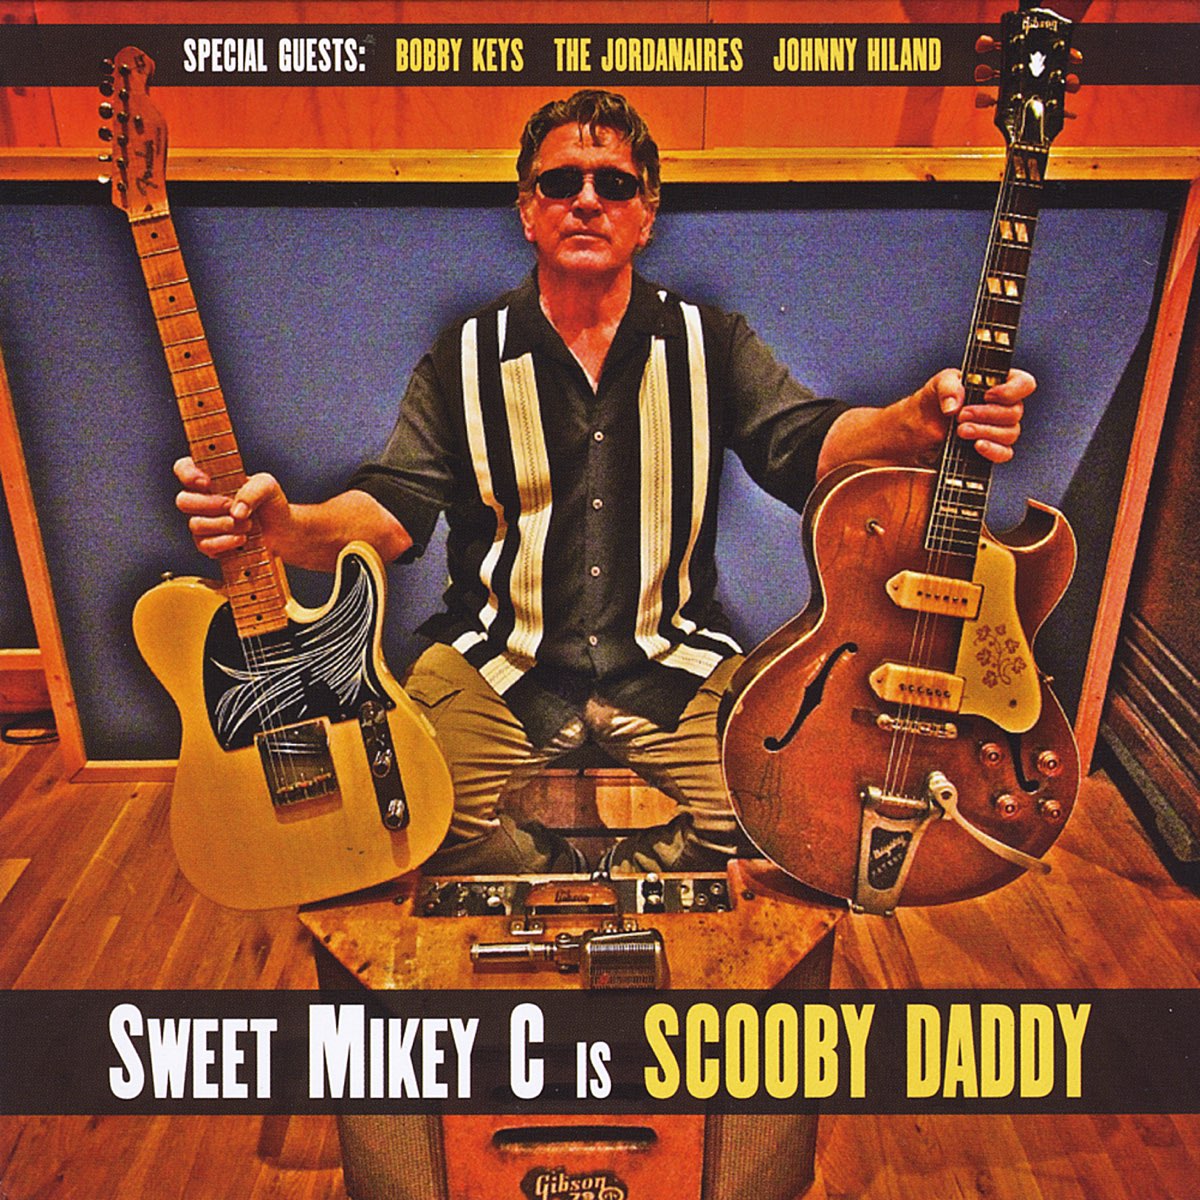 Sweet daddy. Johnny Hiland. Sweet Mikey. Blues Delight album фото. Bobby Keys 1971.